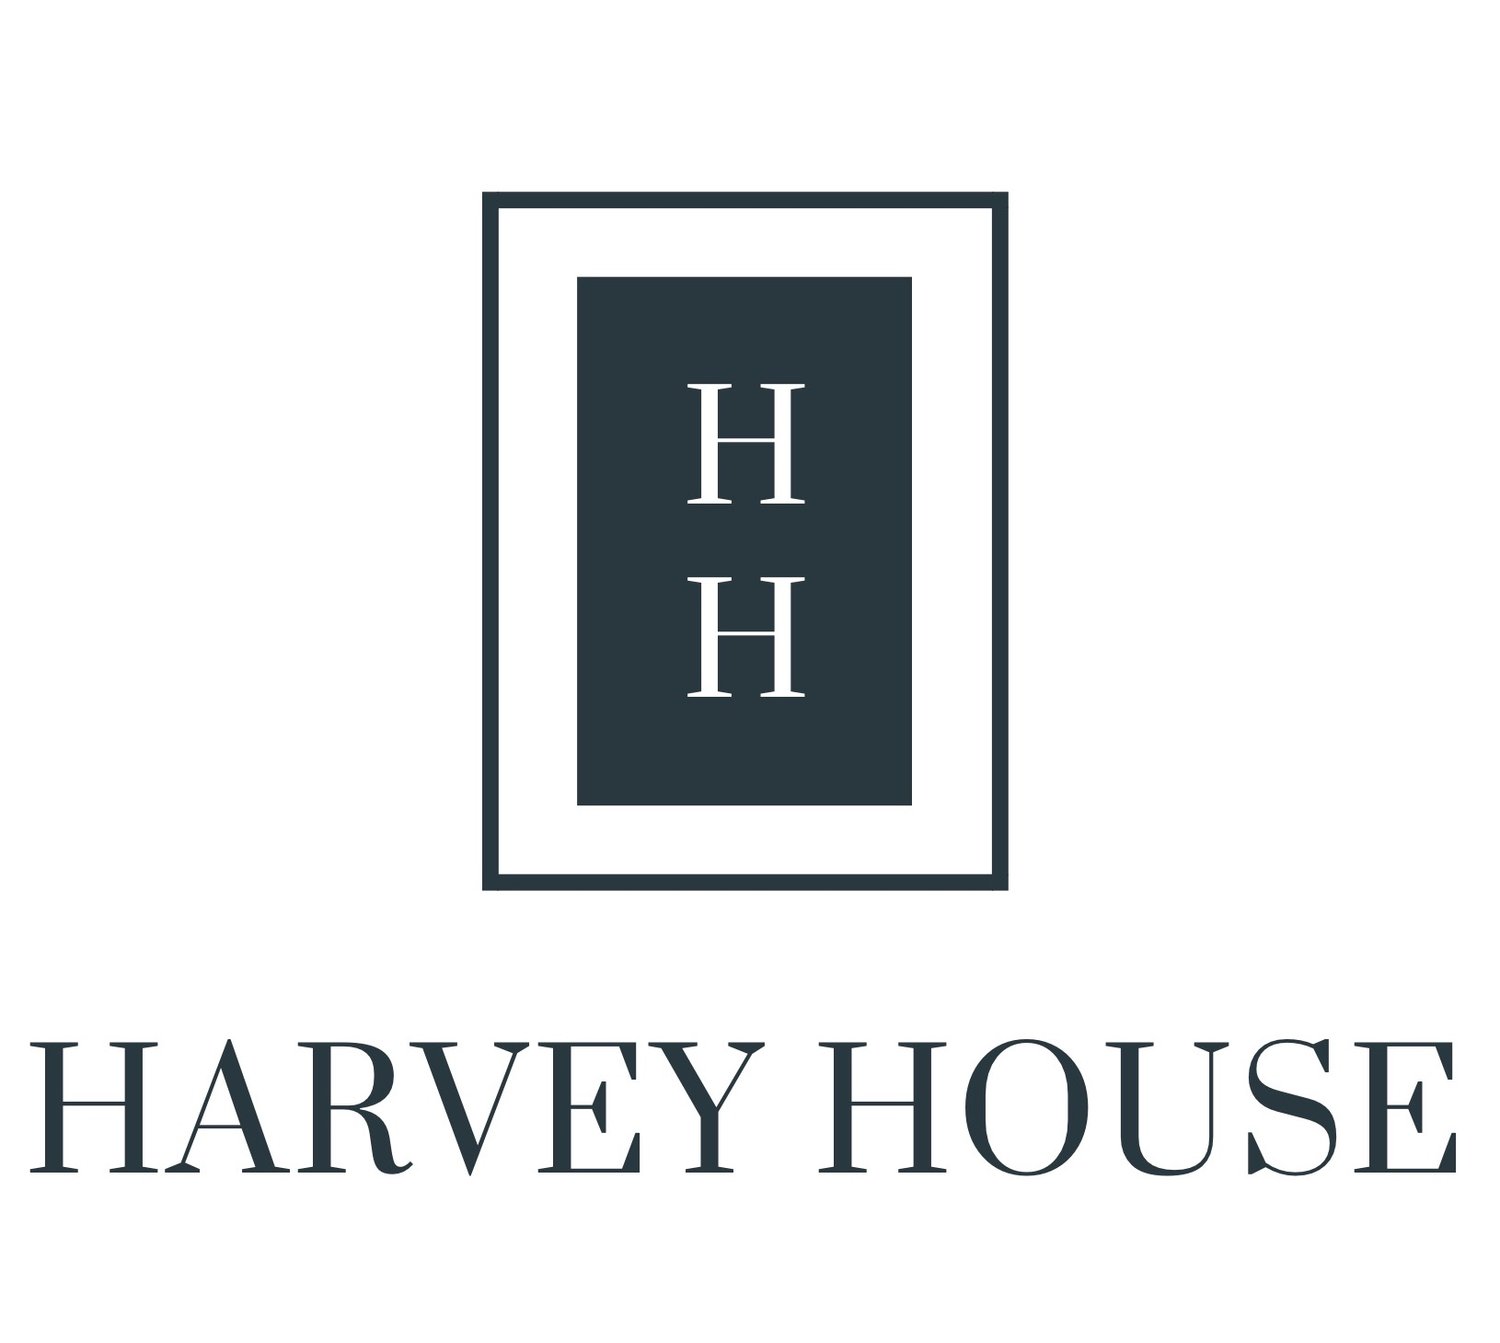 Harvey House Studios